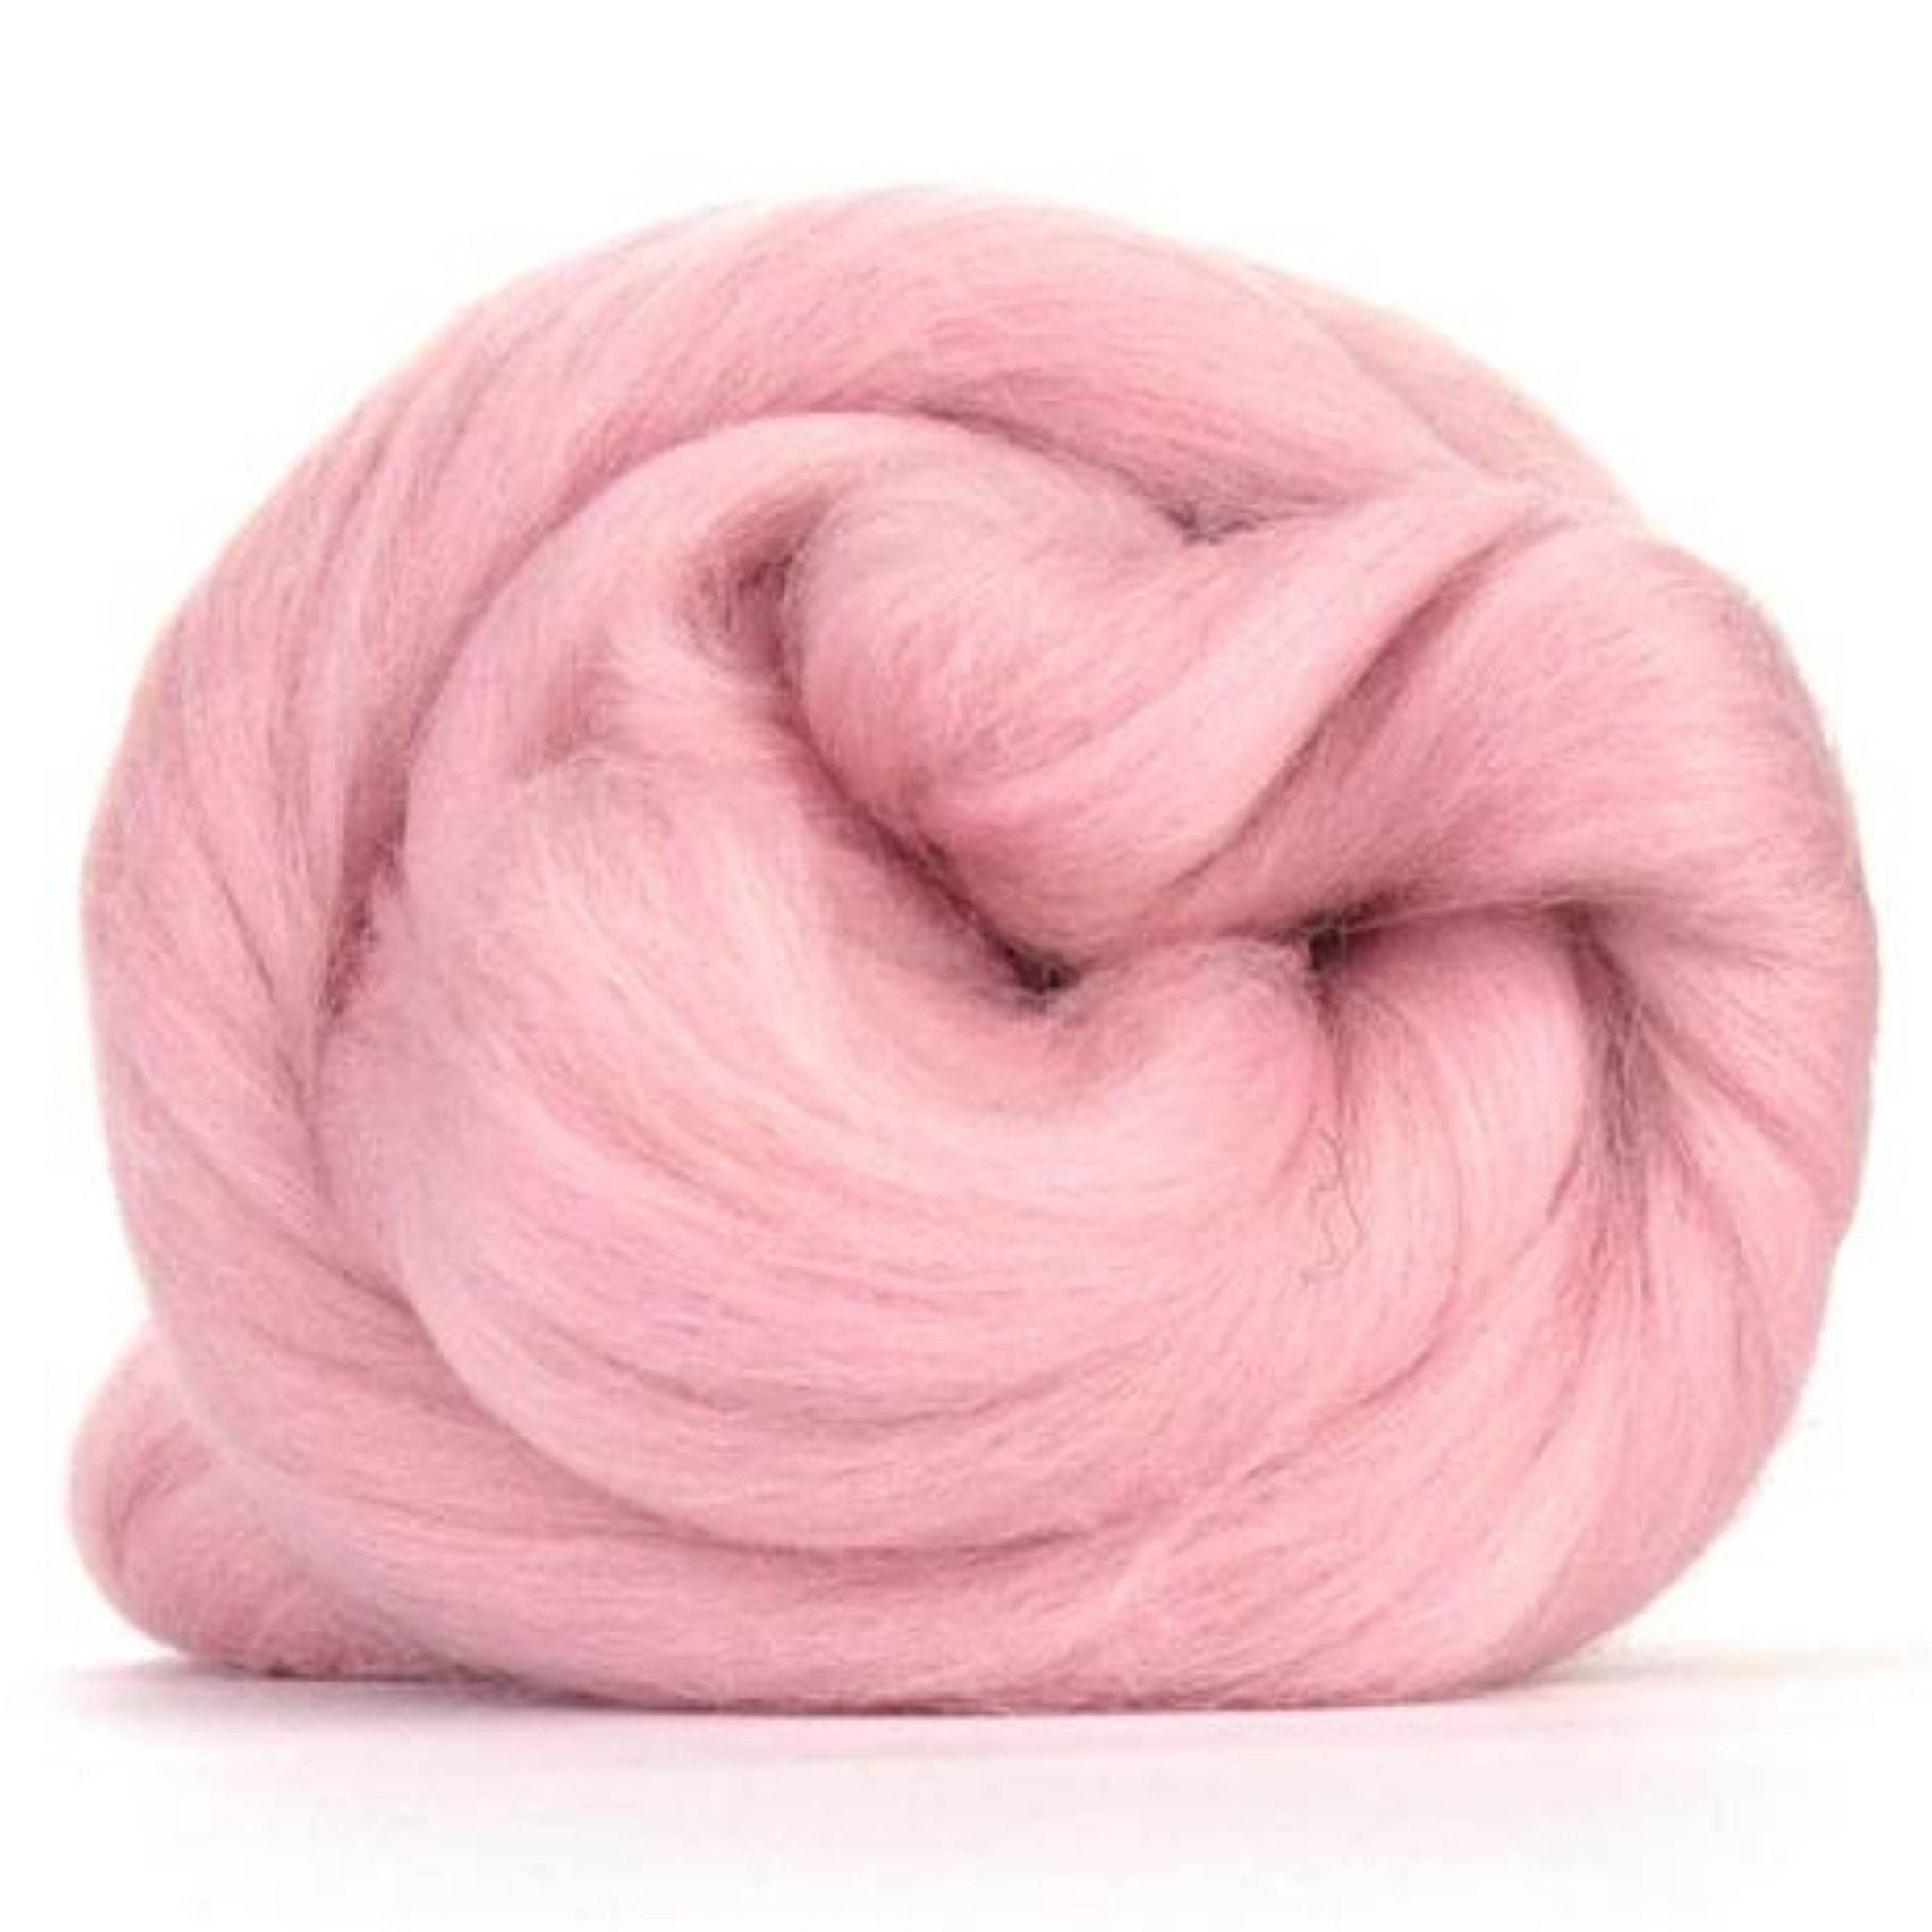 Revolution Fibers Solid Colored Merino Wool Tops | Premium 22 Micron, 64 Count Wool-Wool Roving-Revolution Fibers-Candy Floss-Revolution Fibers